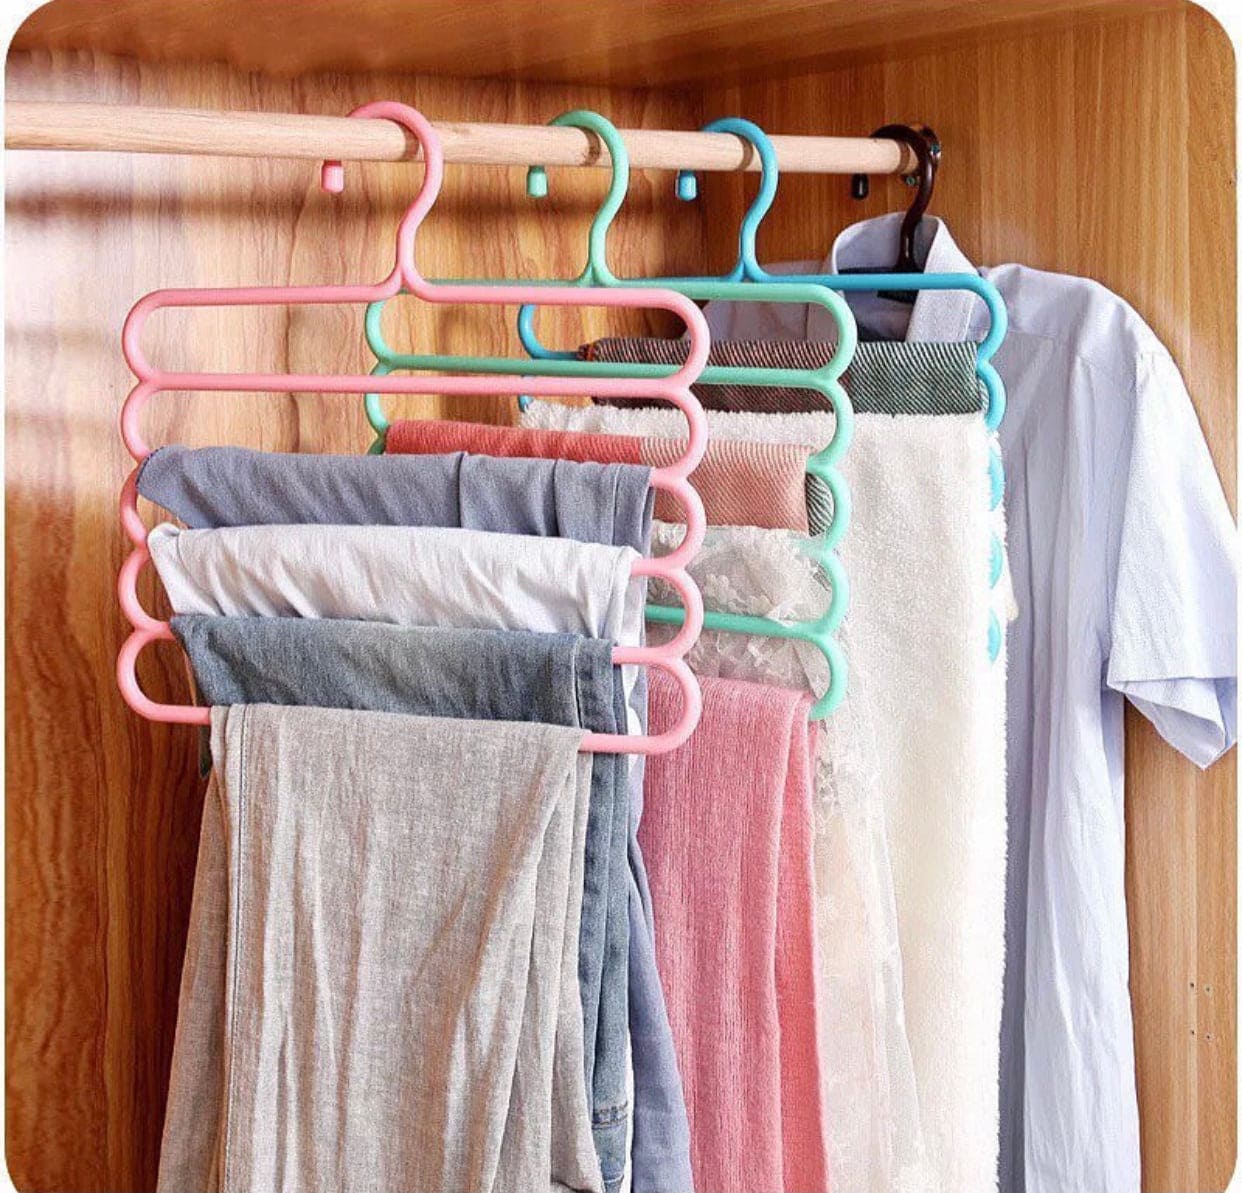 5 Layer Colorful Hanger, Multifunctional Clothes Hanger, Pants Hangers, Holders Trousers, Hanger Storage Rack, Clothes Hanger, Wardrobe Closet Organization, Clothing Hangers